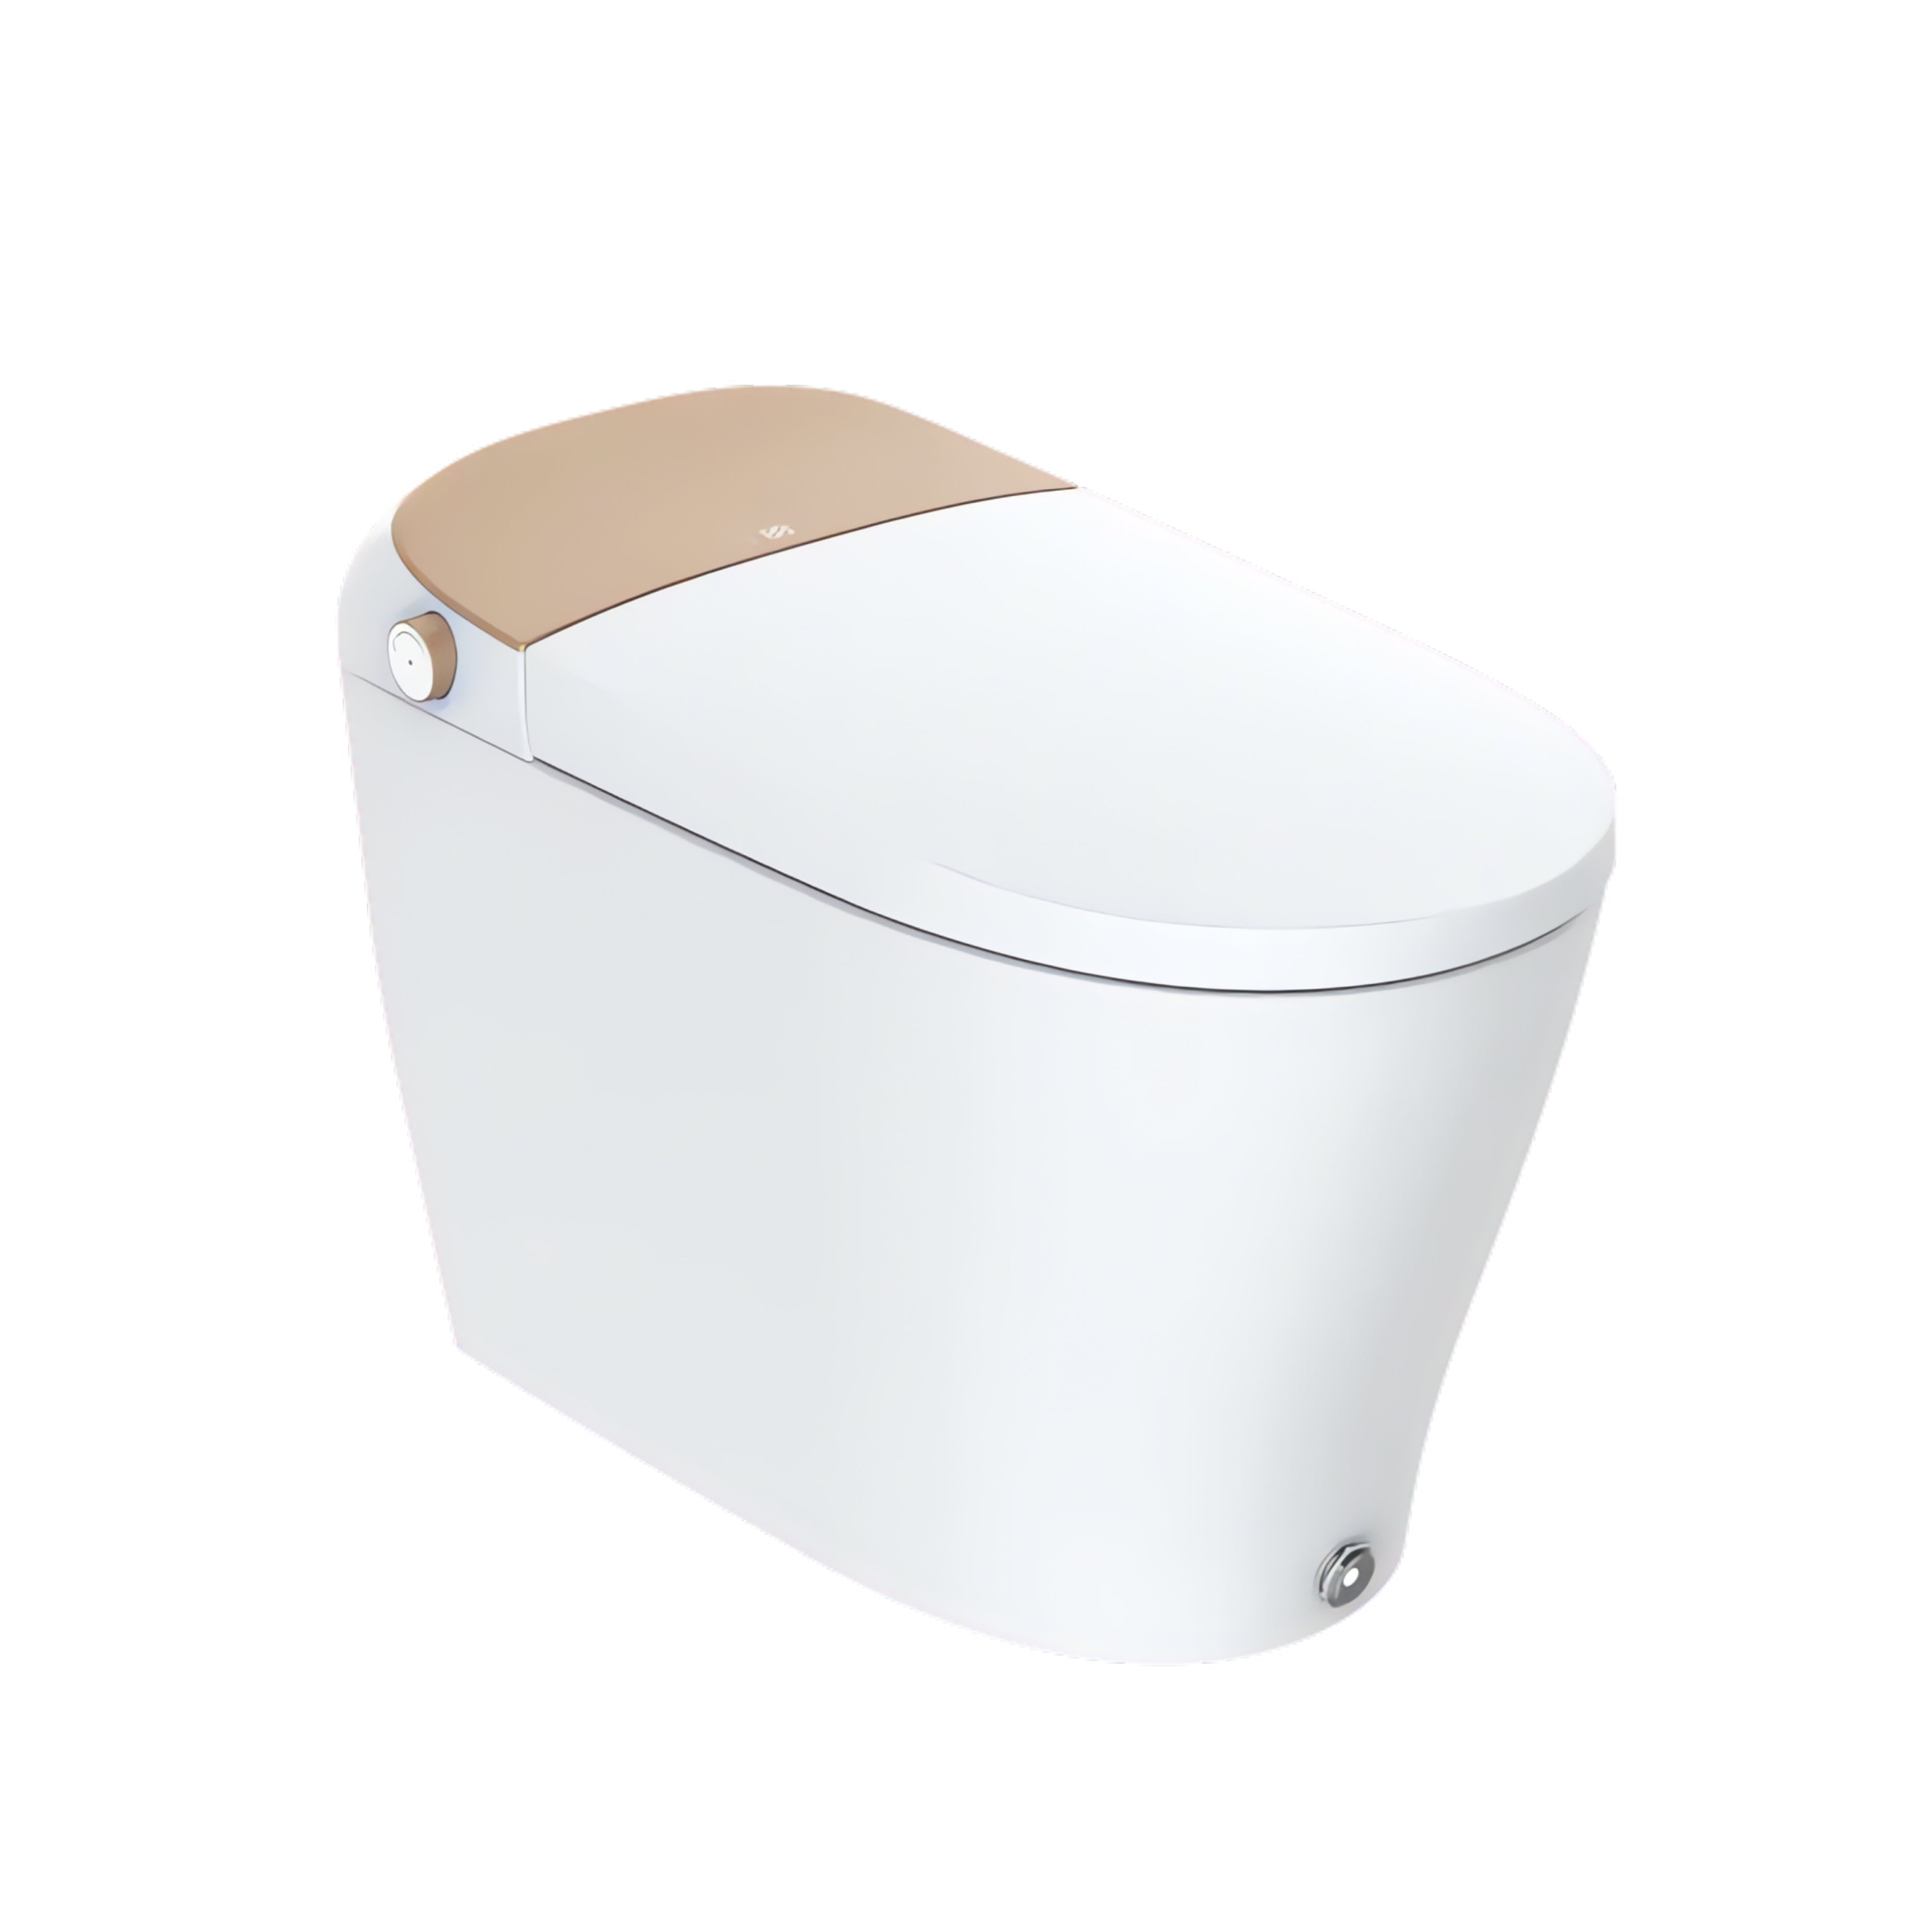 Lux Gold Smart Toilet